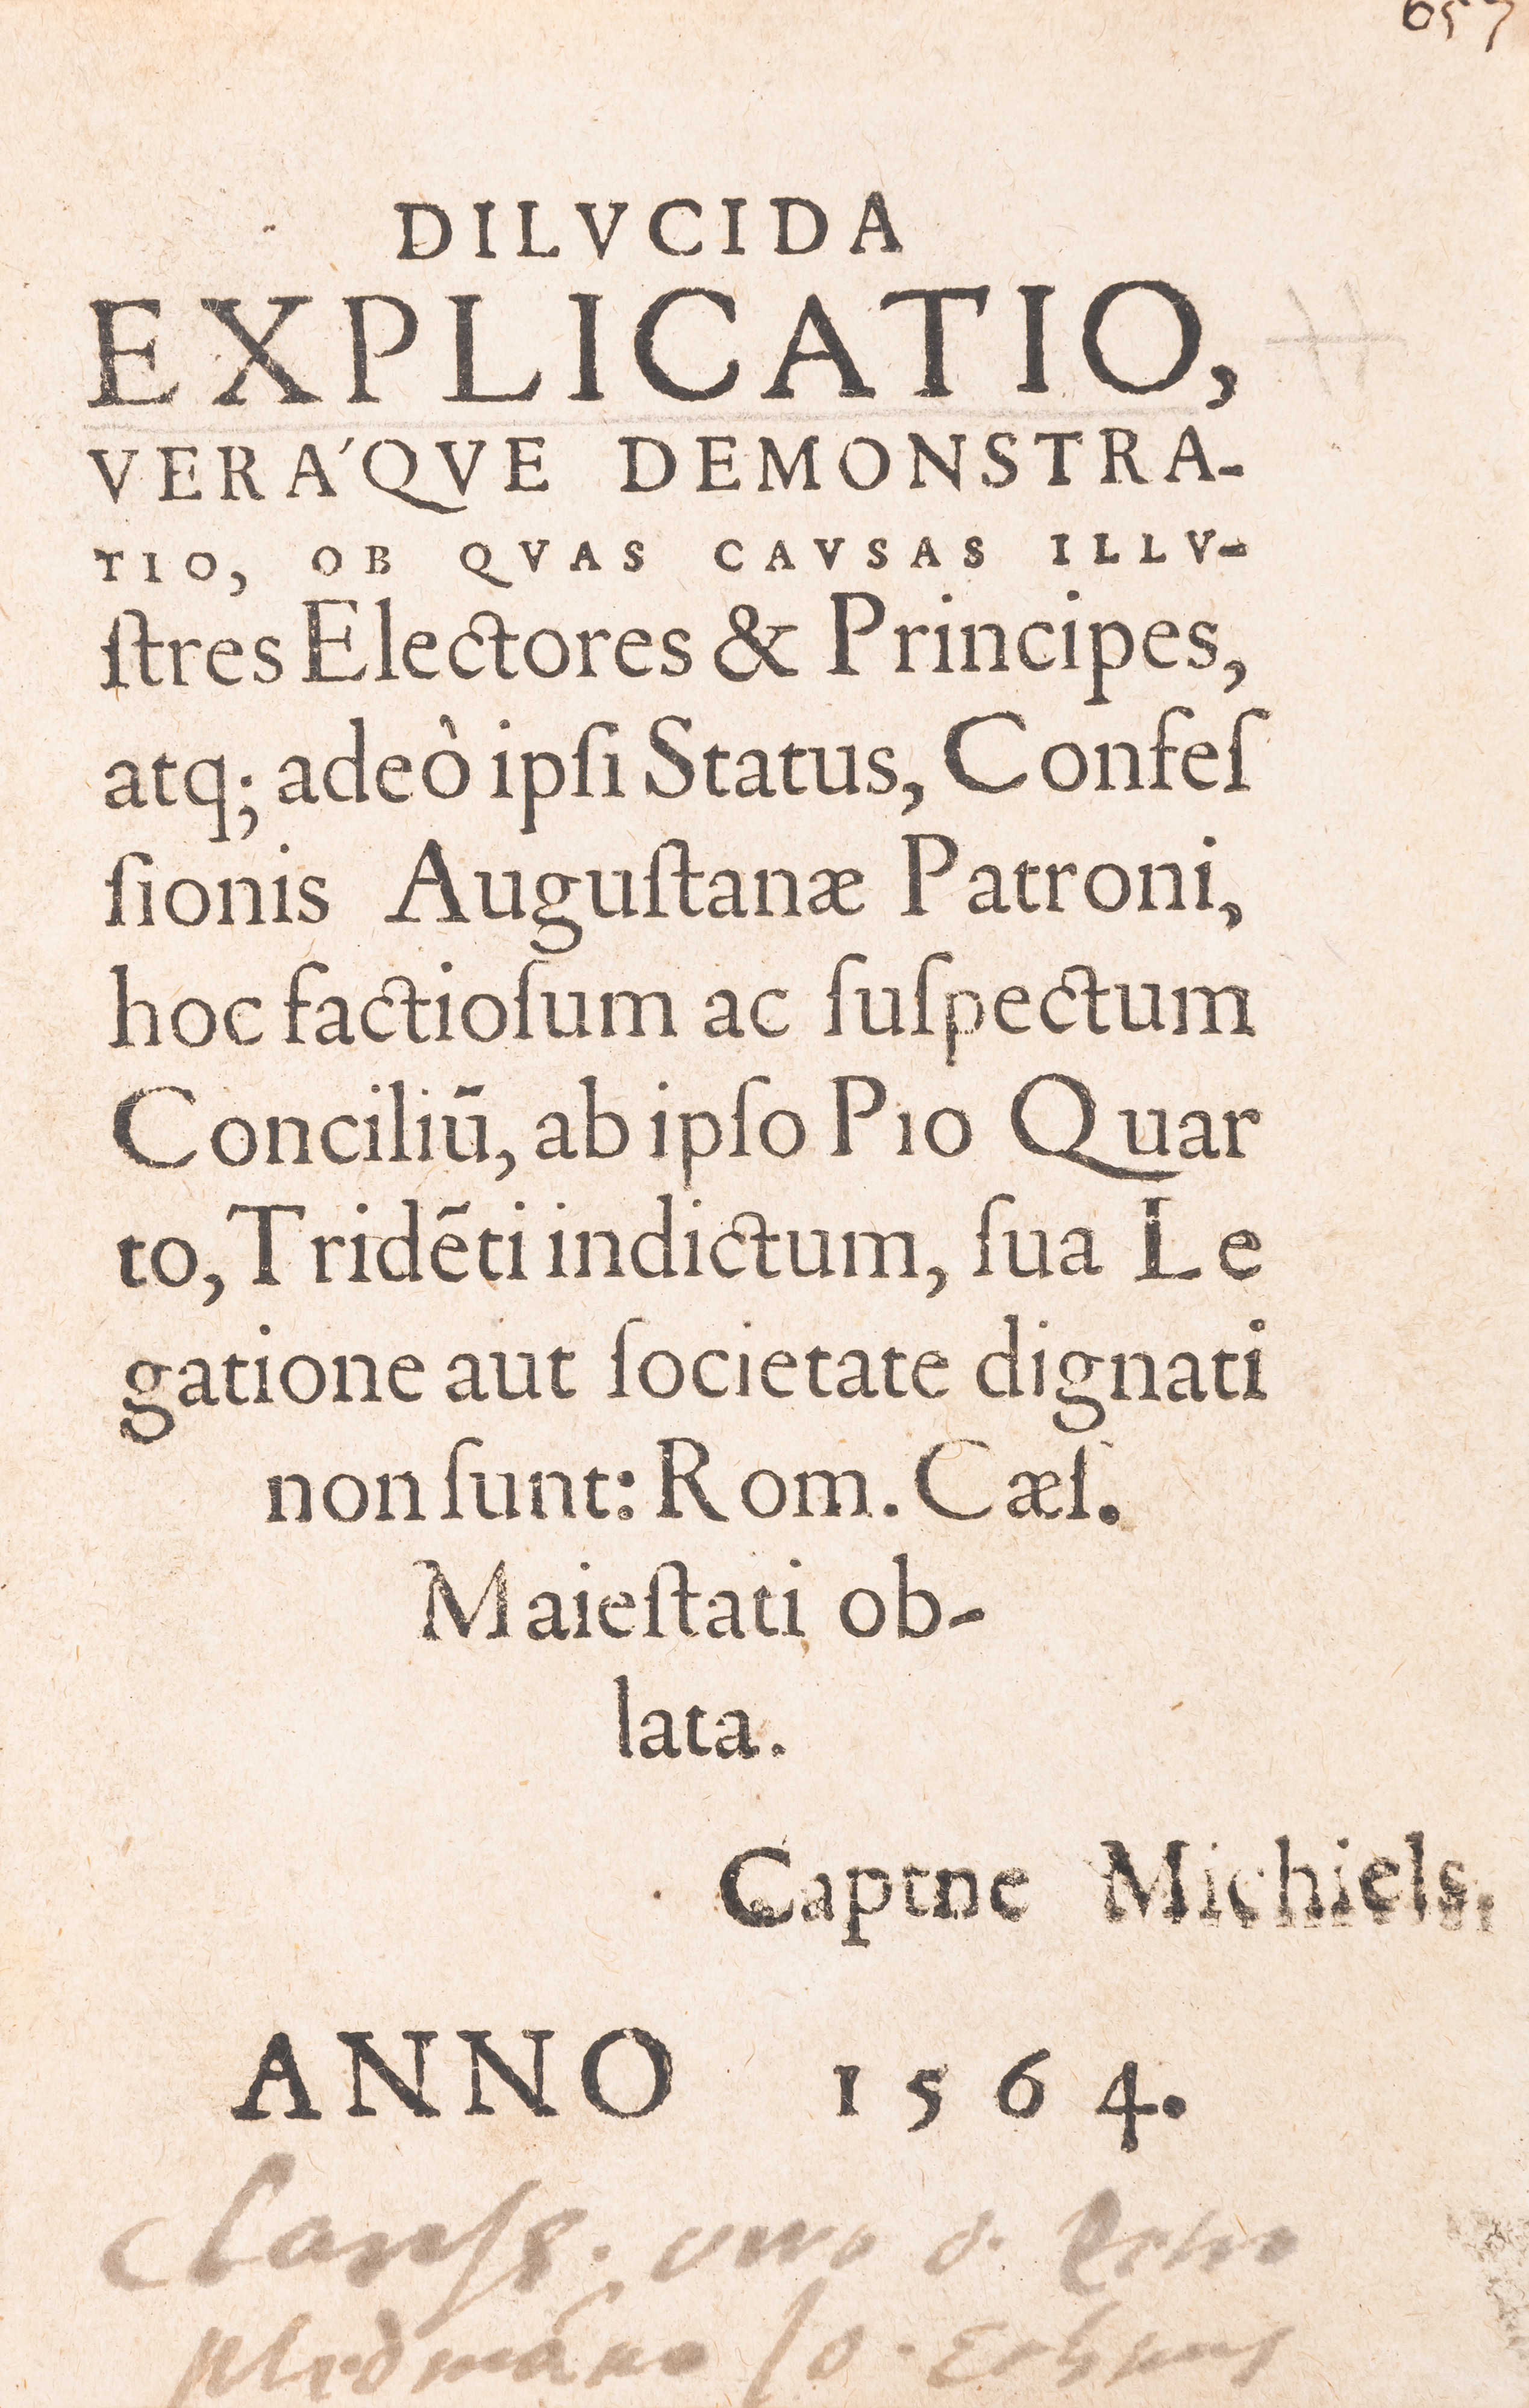 Council of Trent.- Dilucida Explicato, veraque demonstratio, ob quas causas, Illustres Electores ...